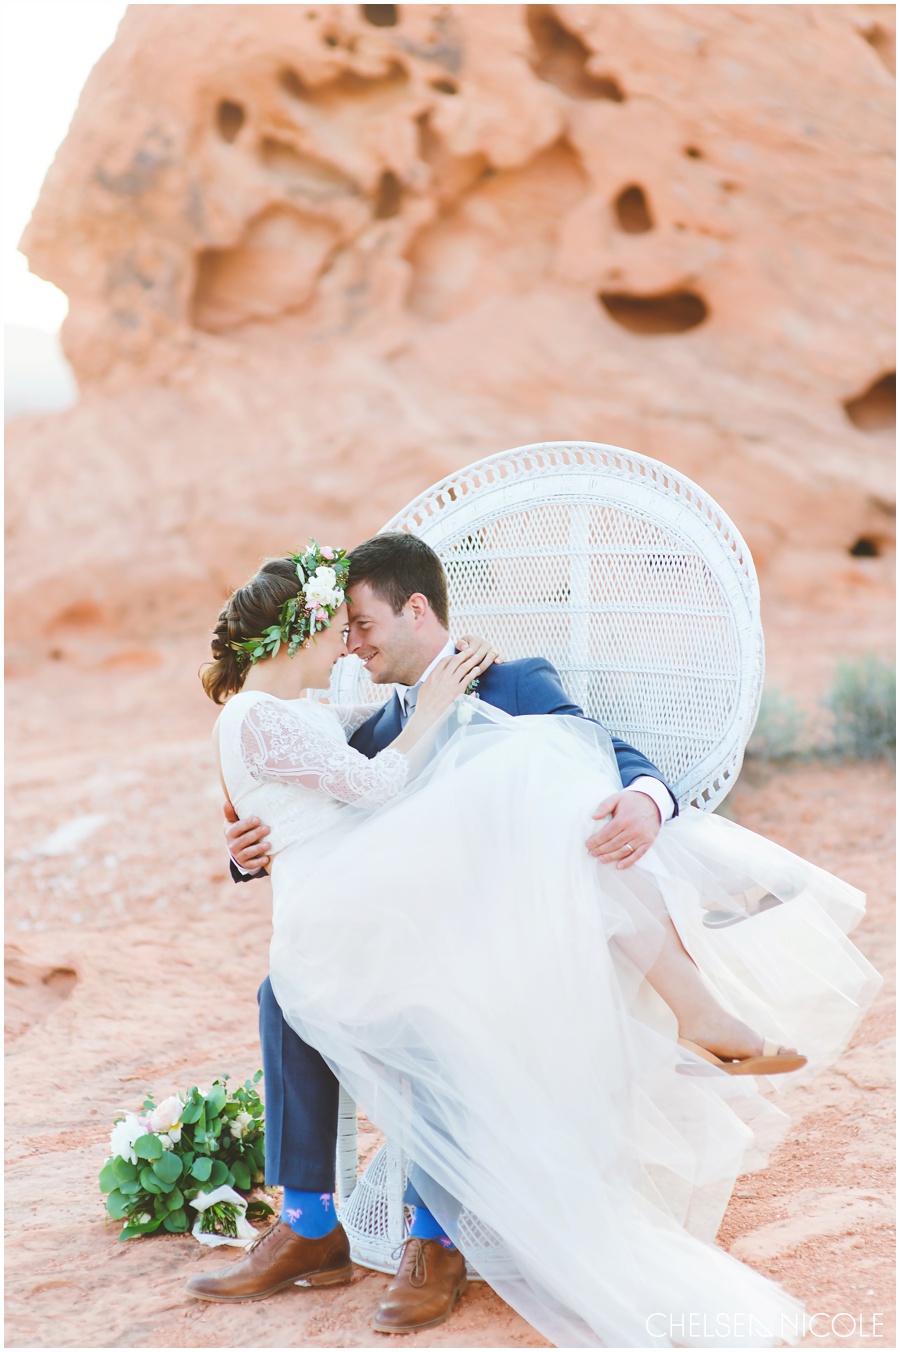 Valley of Fire Boho Desert Wedding | Chelsea Nicole Photography